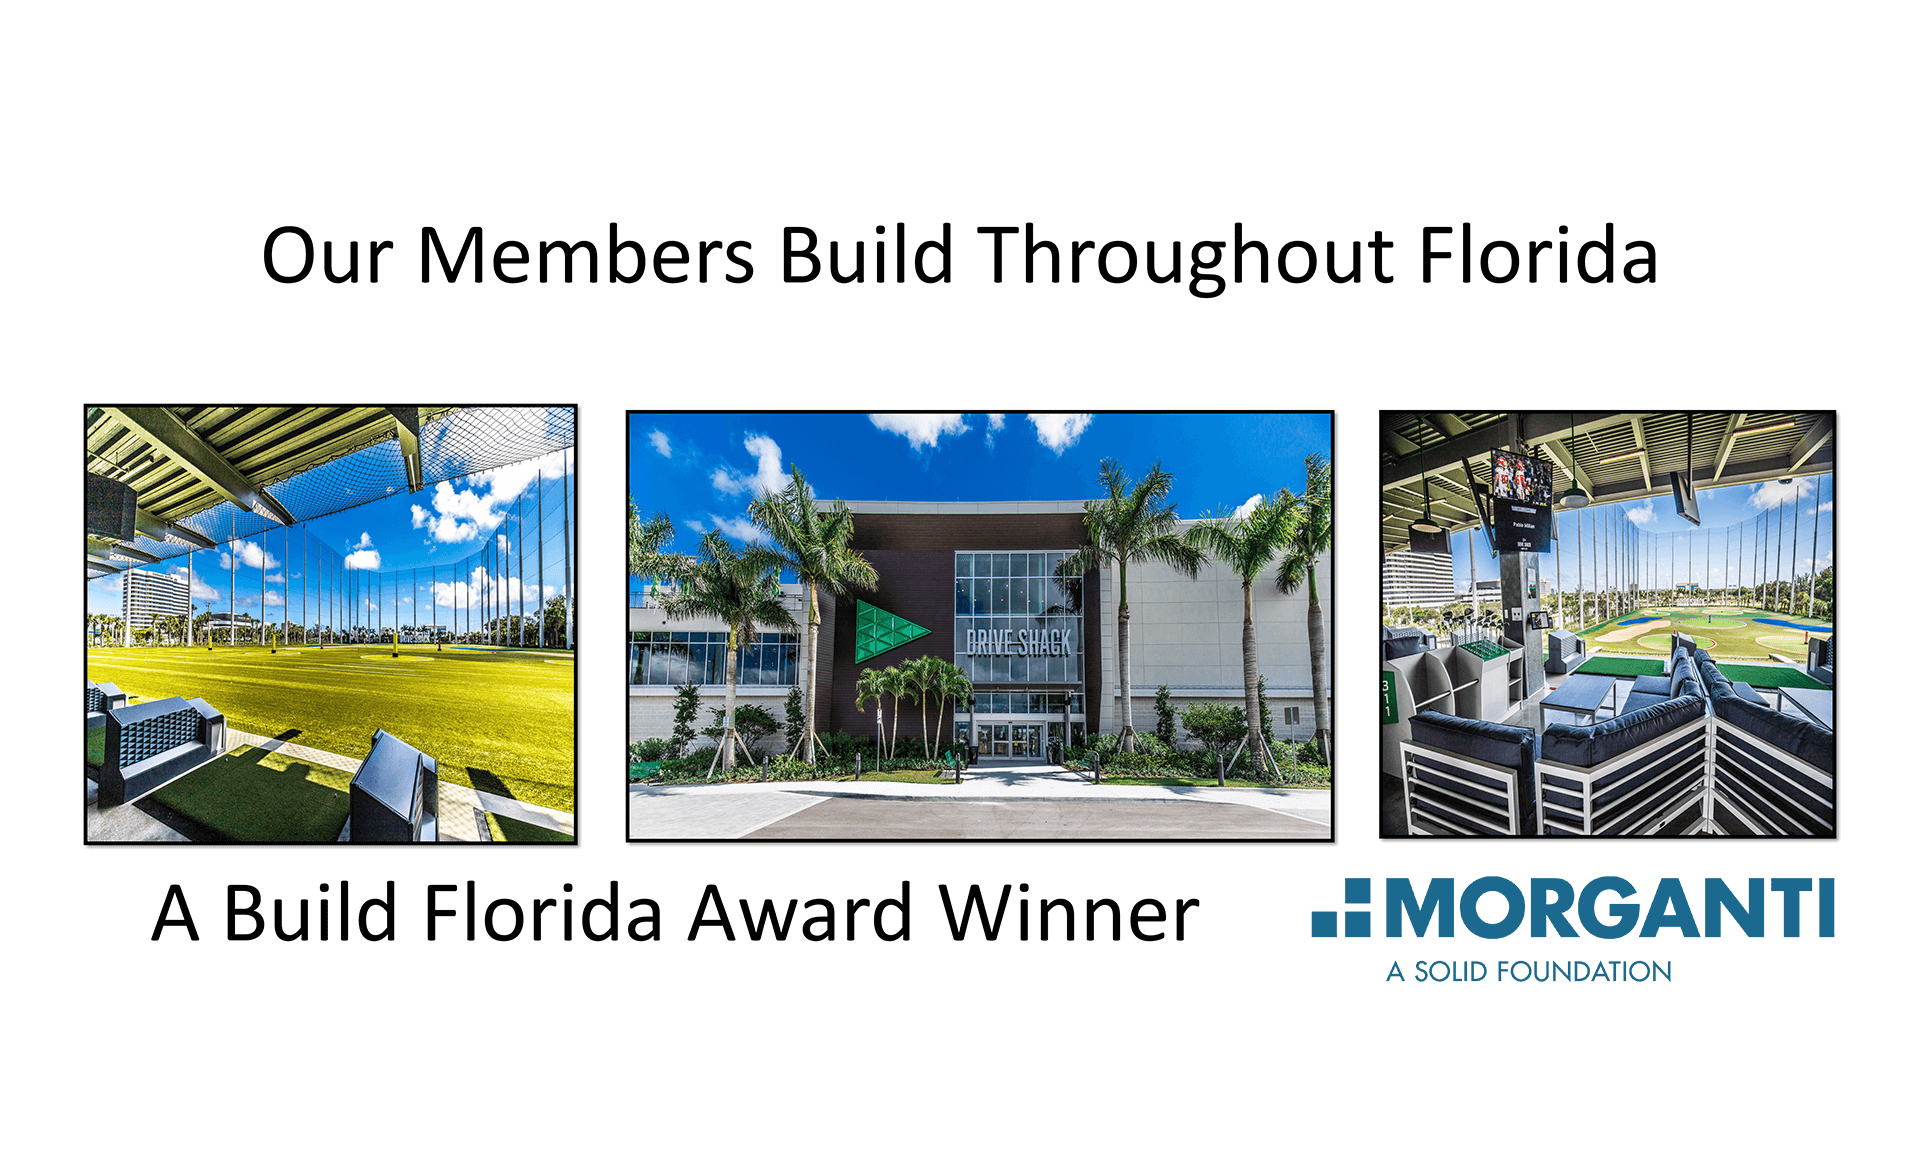 A Build Florida Award Winner morganti